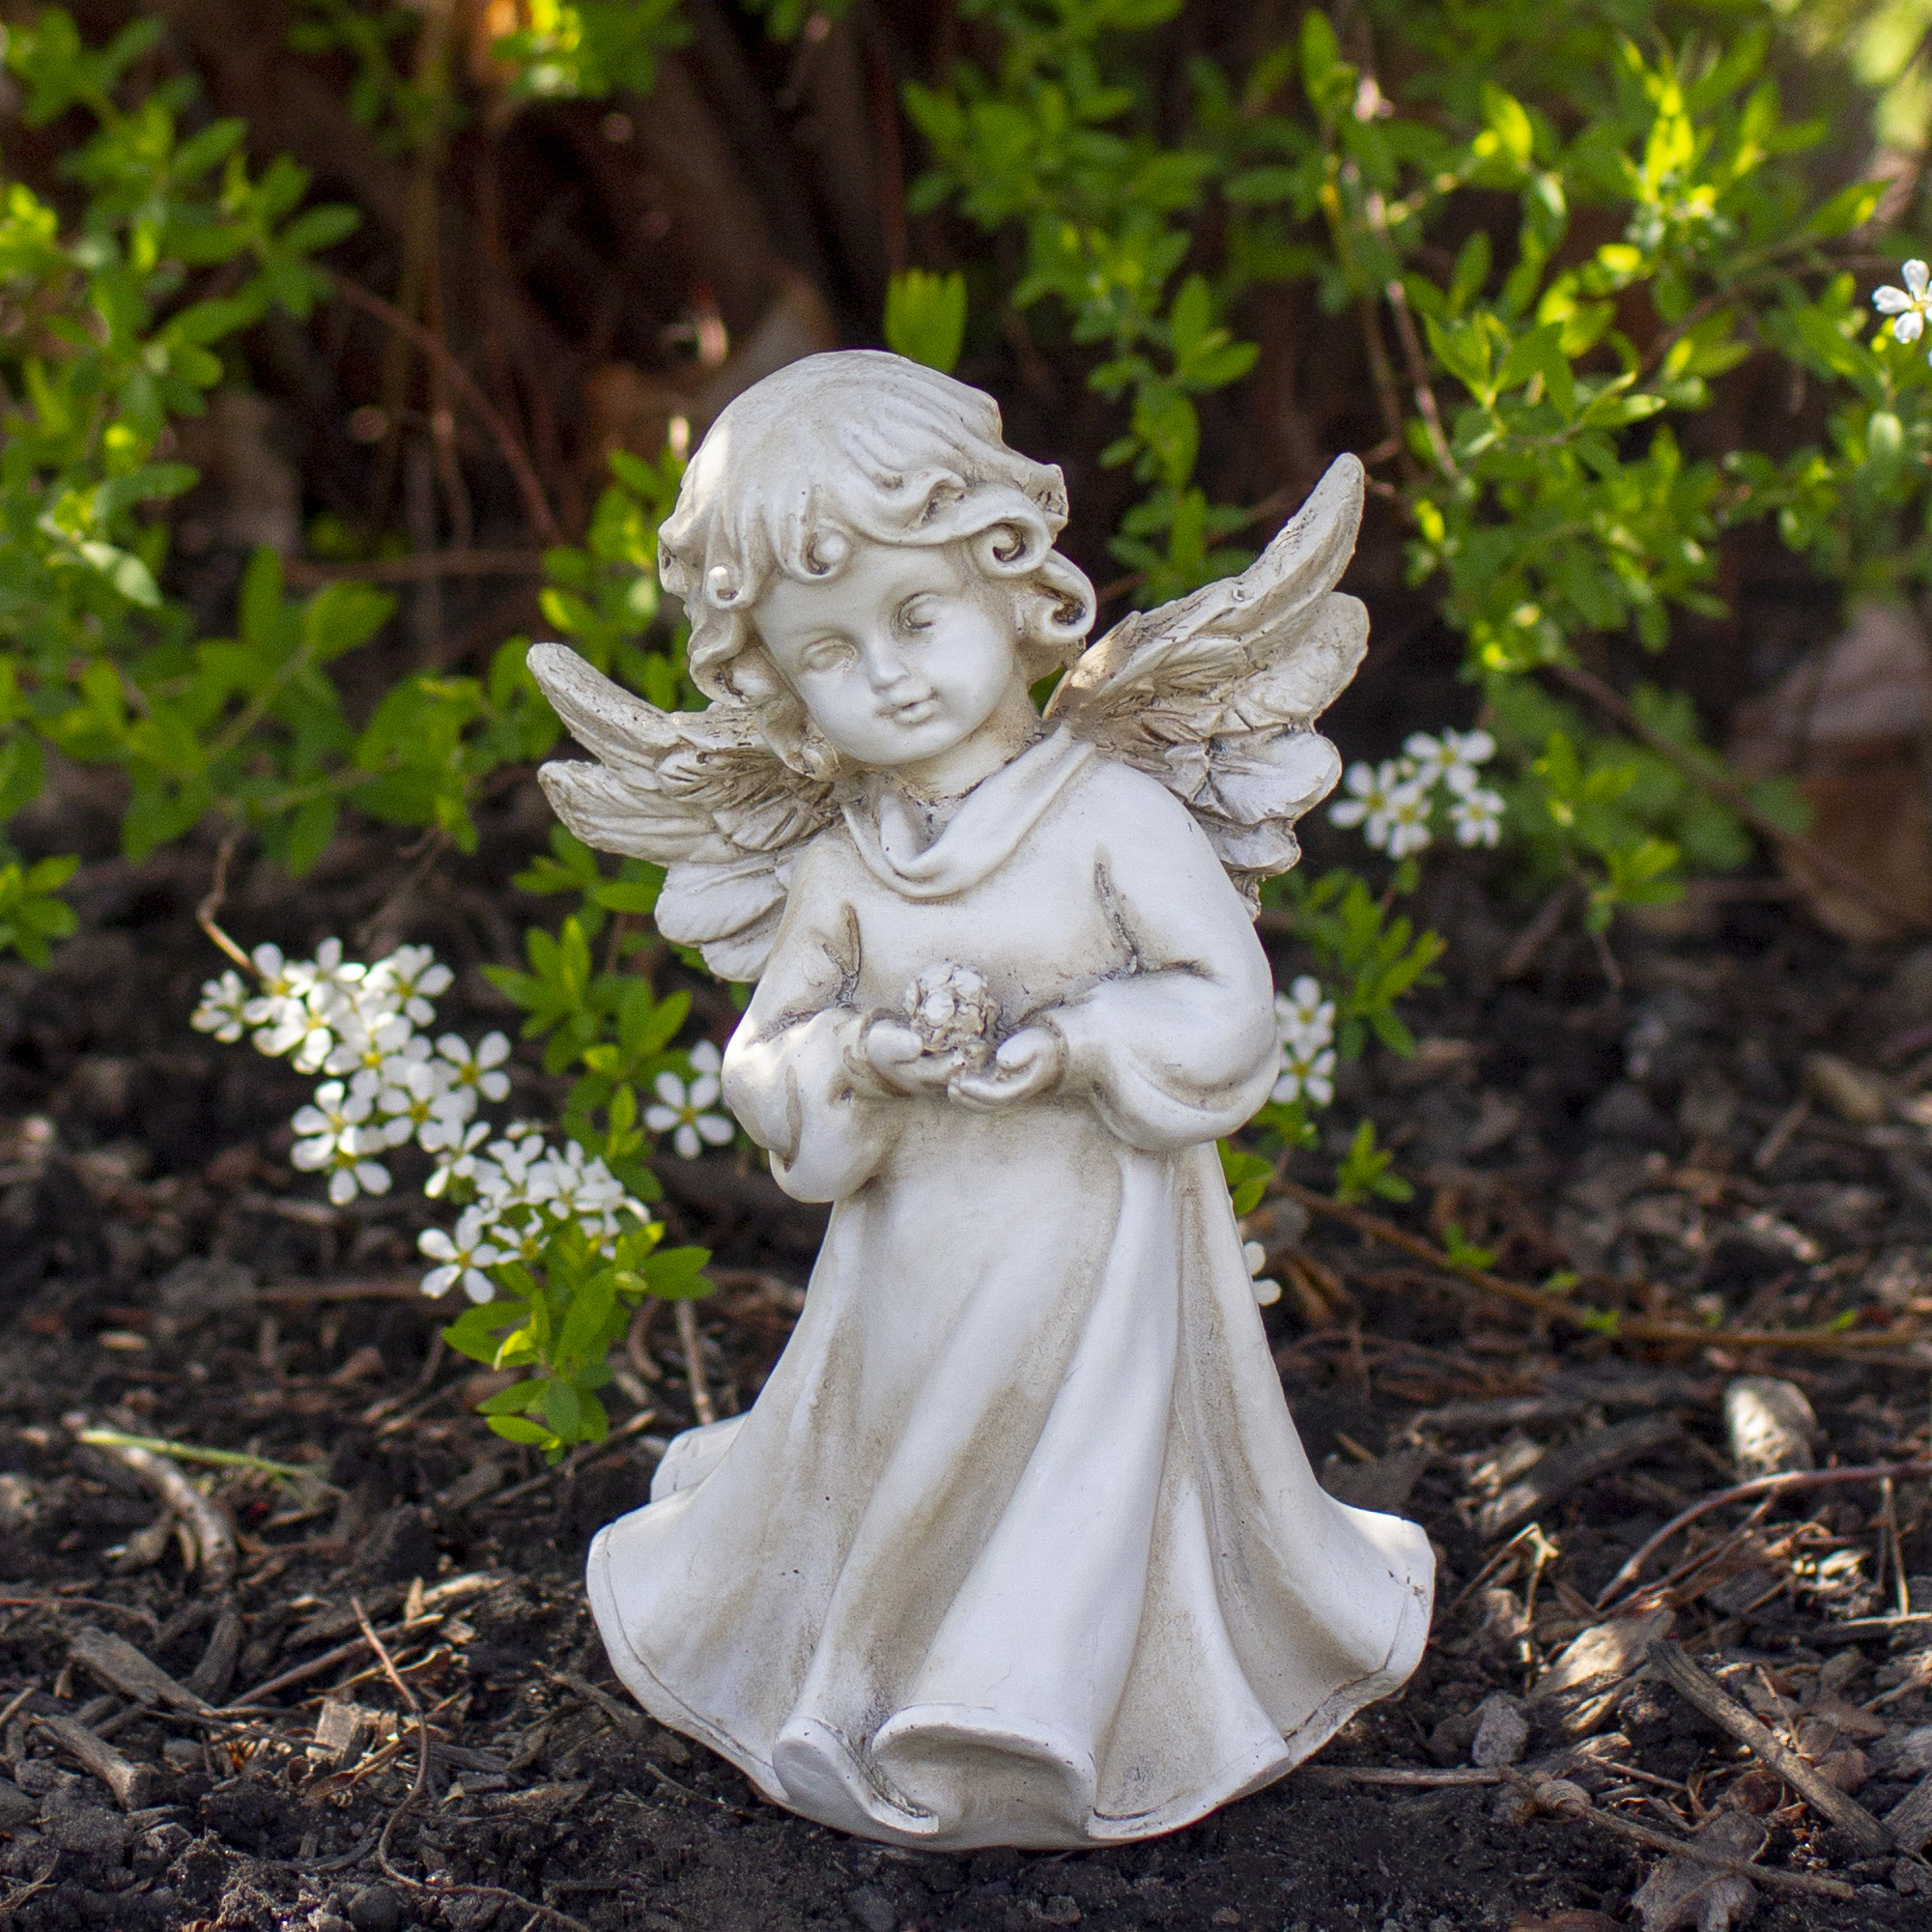 Northlight 6.5" Angel Girl Holding Flower Outdoor Garden Statue - image 2 of 5